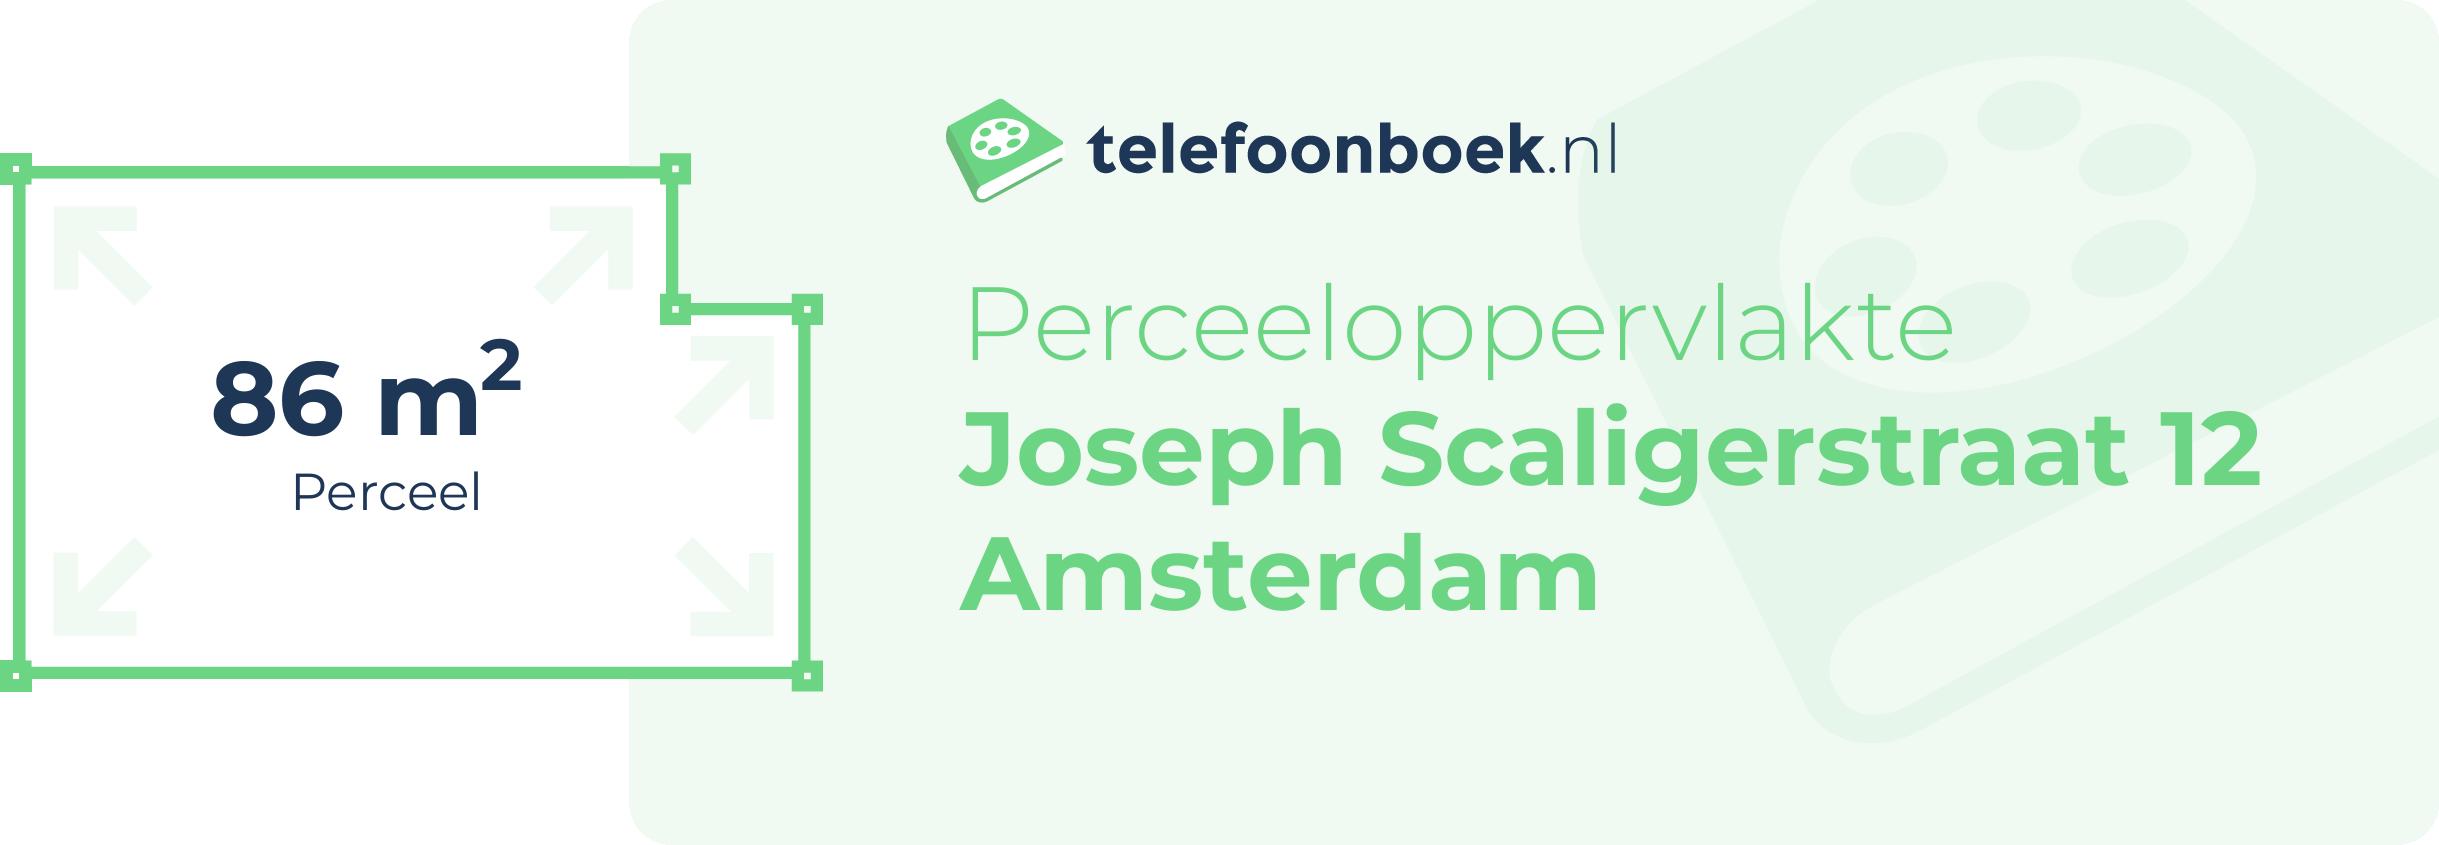 Perceeloppervlakte Joseph Scaligerstraat 12 Amsterdam